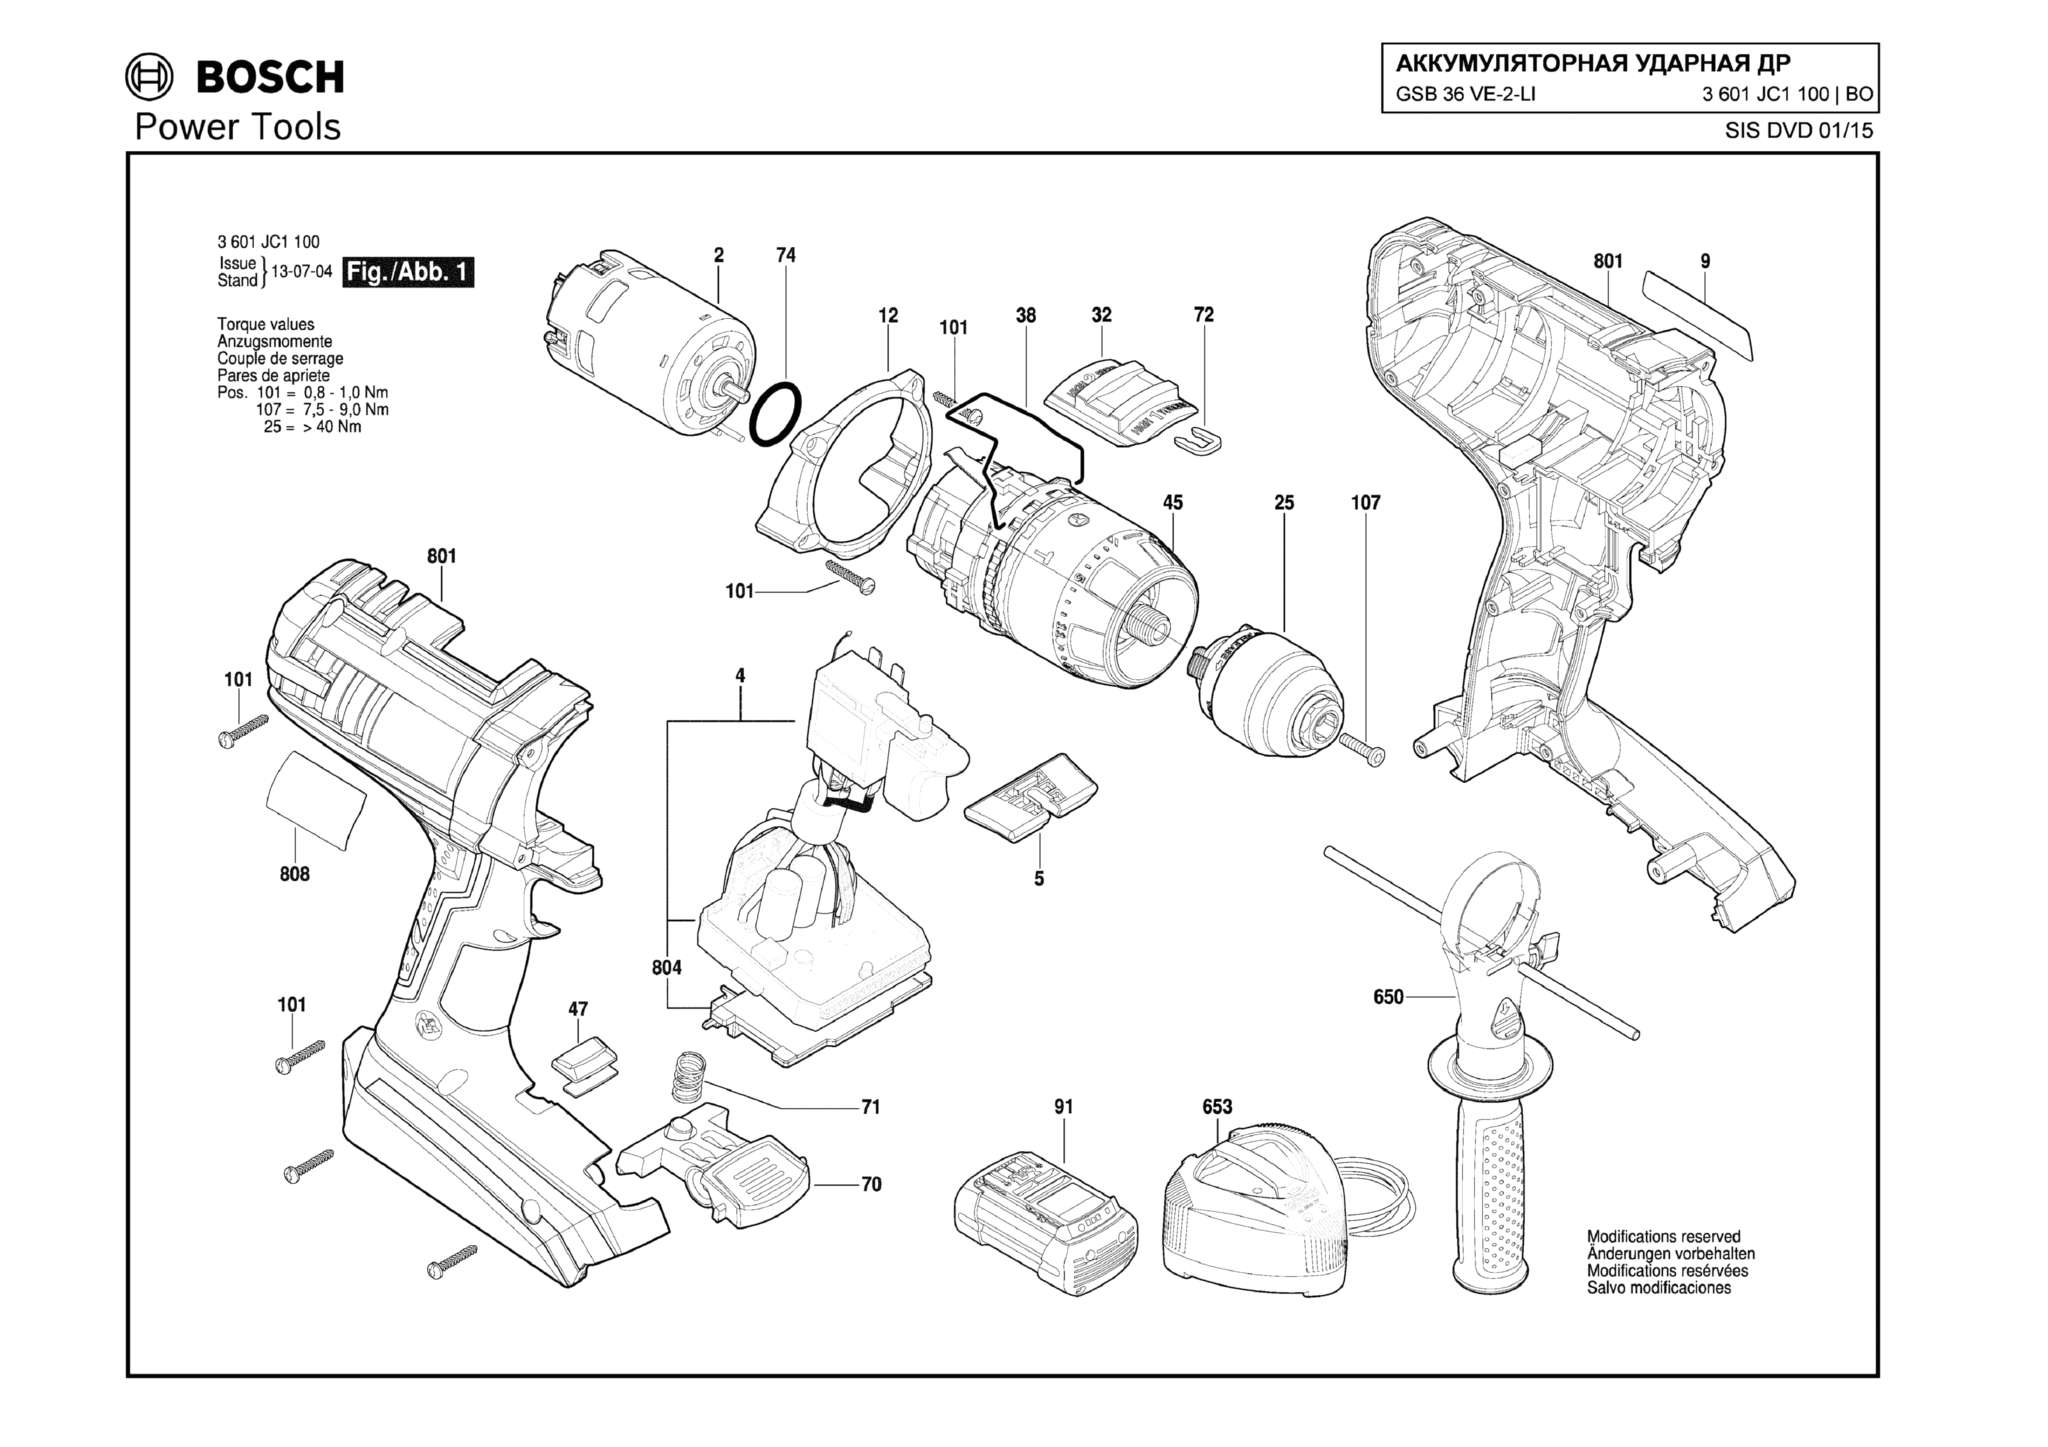 Запчасти, схема и деталировка Bosch GSB 36 VE-2-LI (ТИП 3601JC1100)